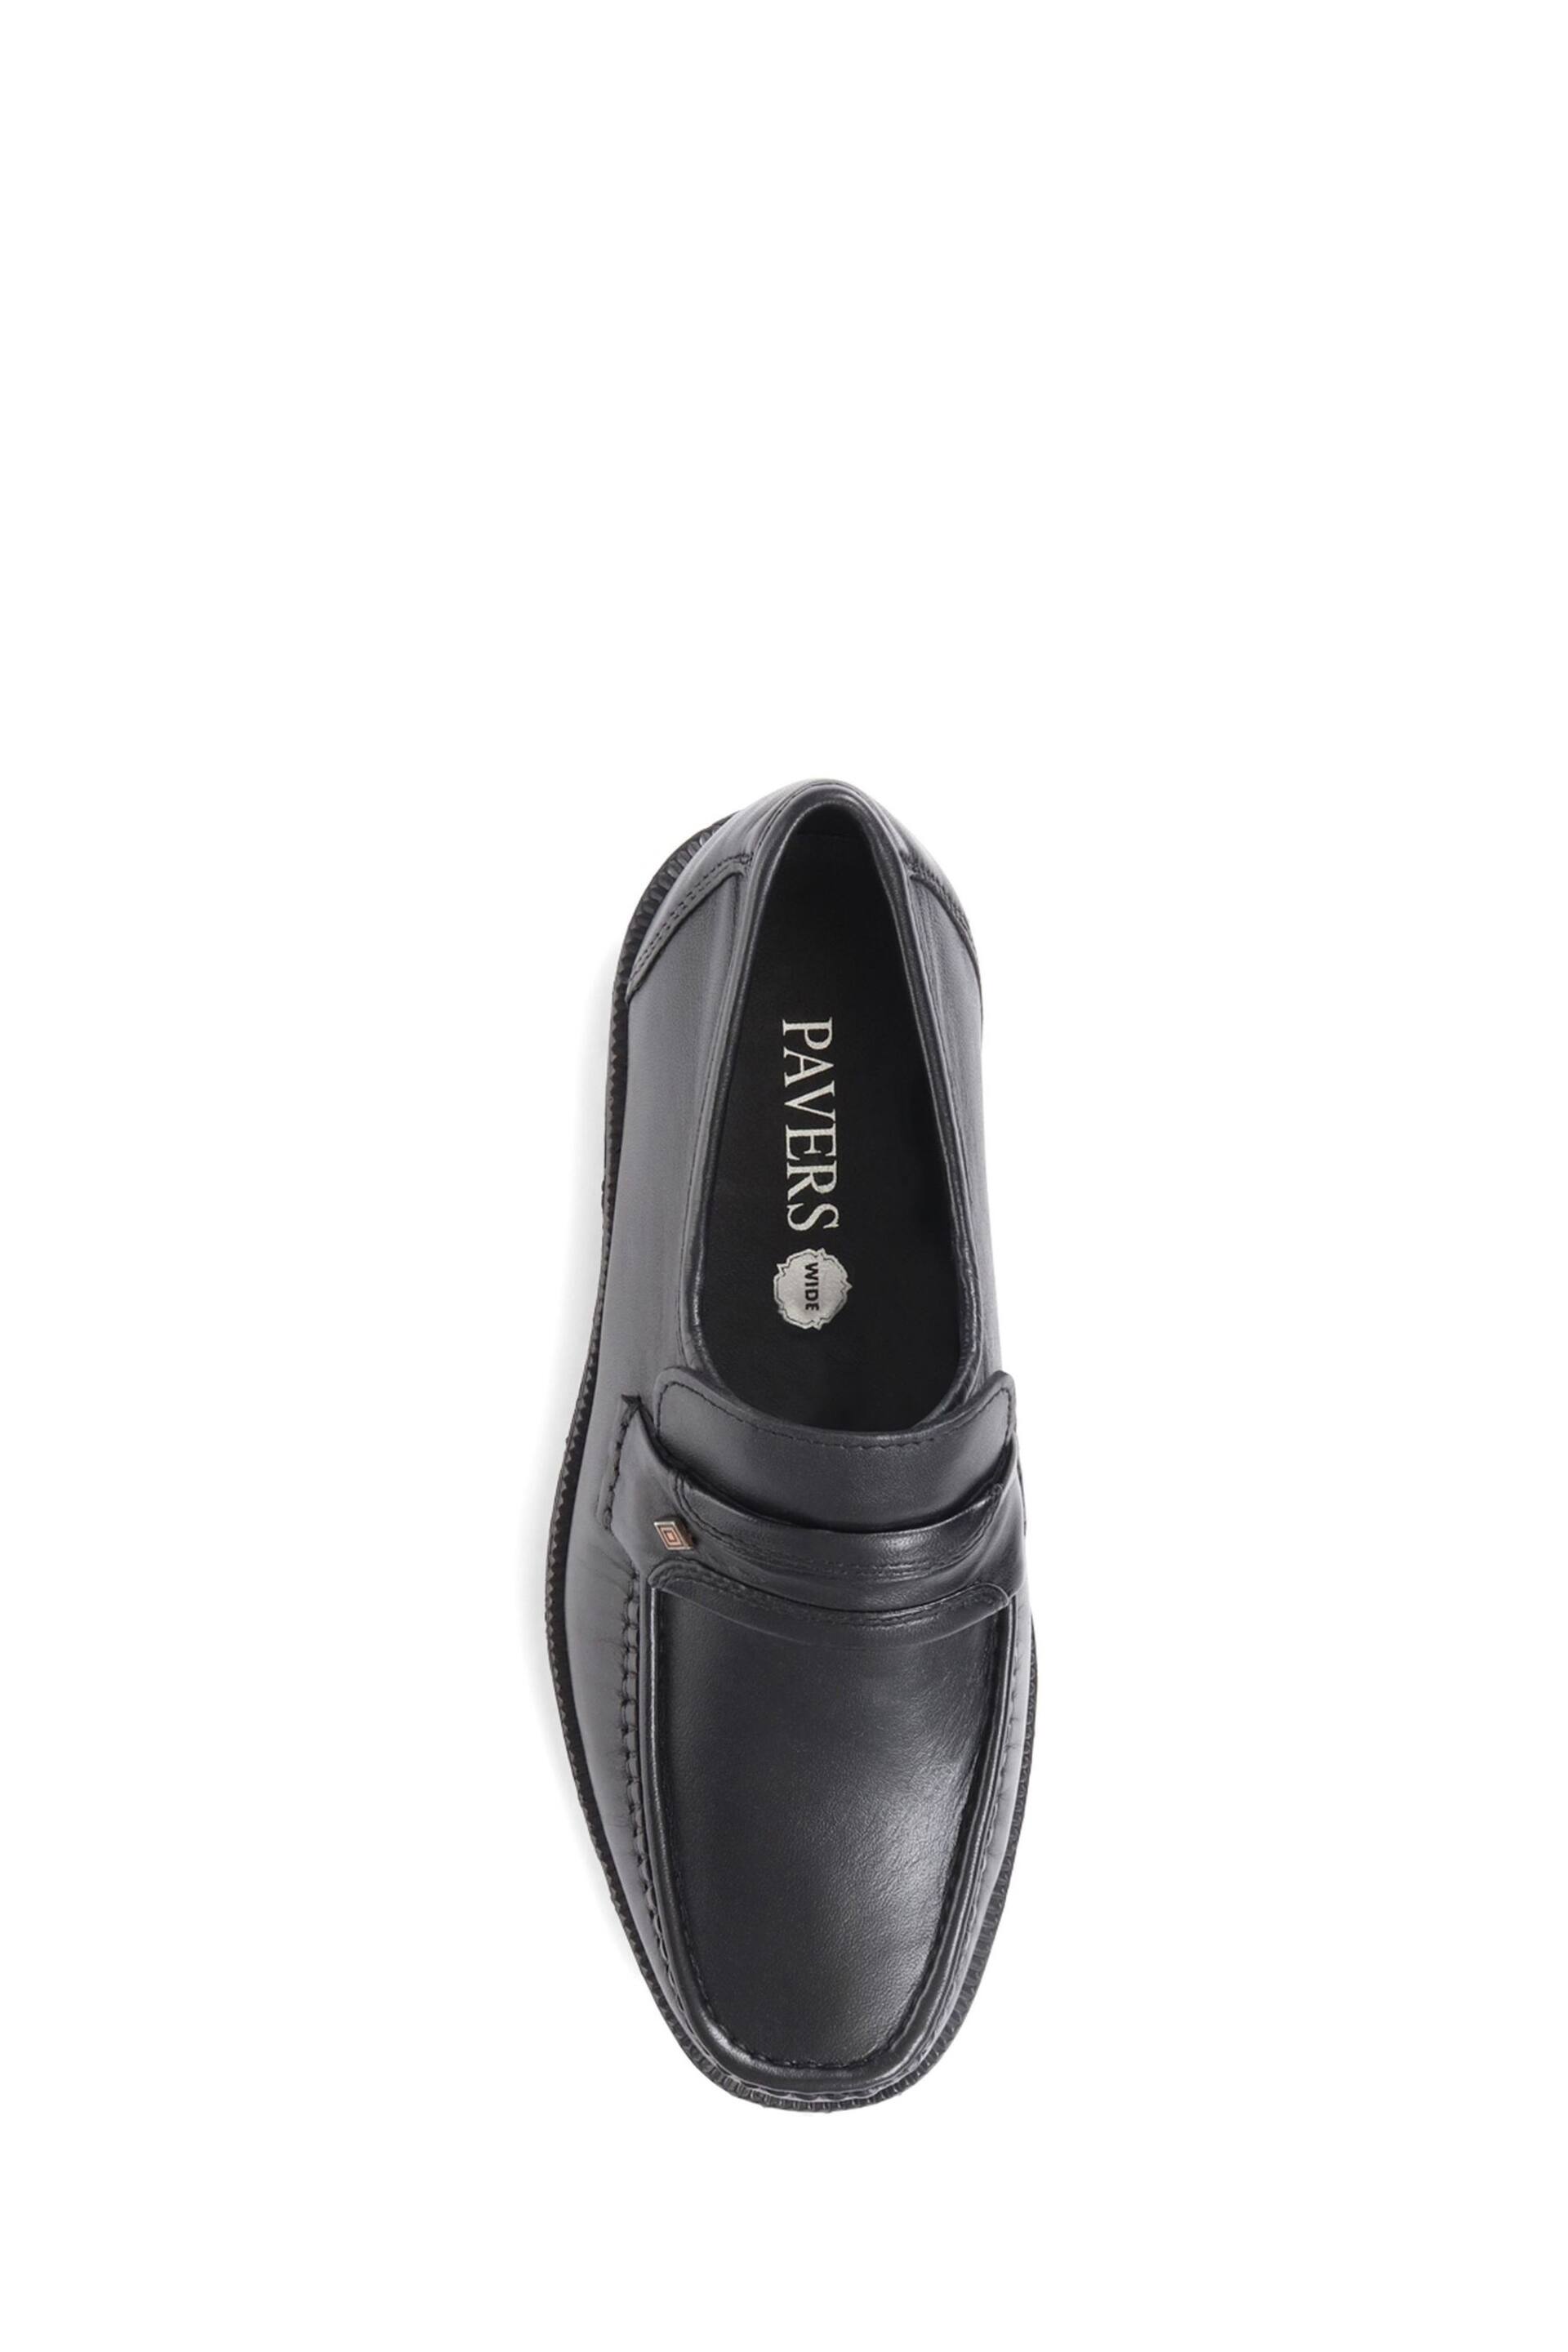 Pavers Gents Black Moccasin Smart Shoes - Image 4 of 5